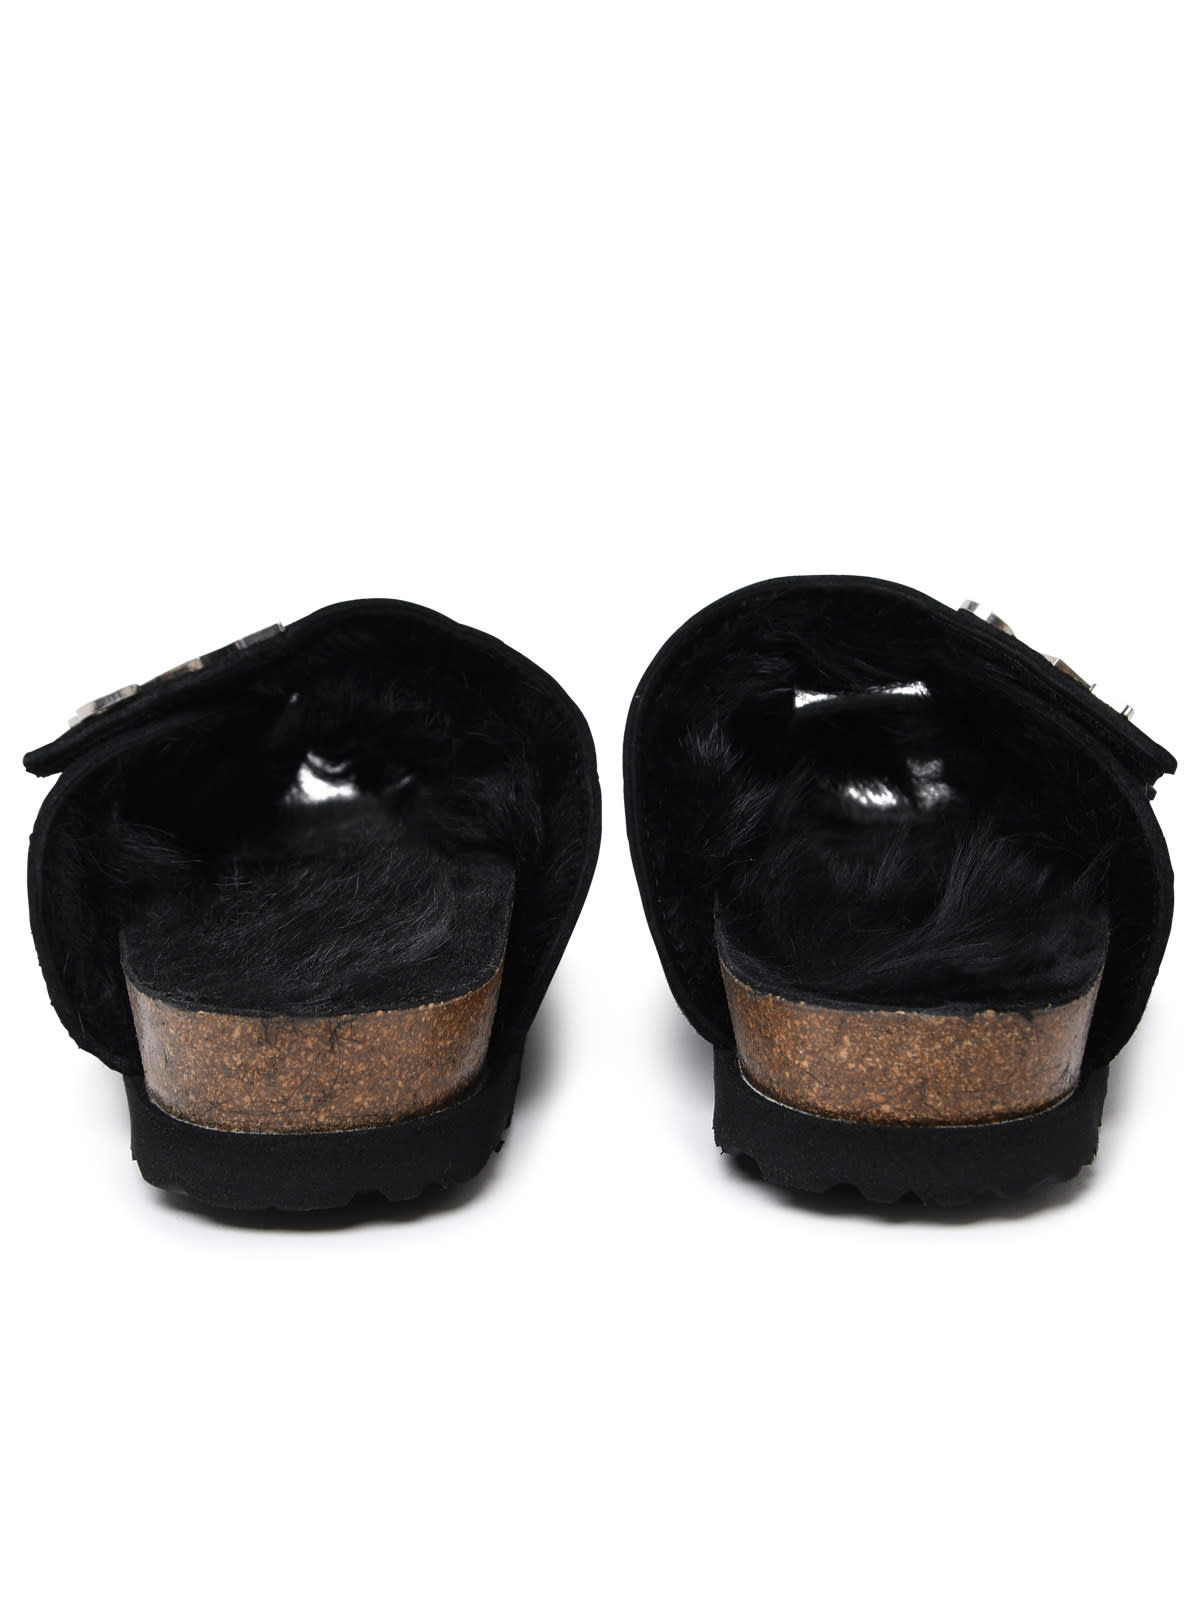 Shop Palm Angels Comfy Black Suede Slippers